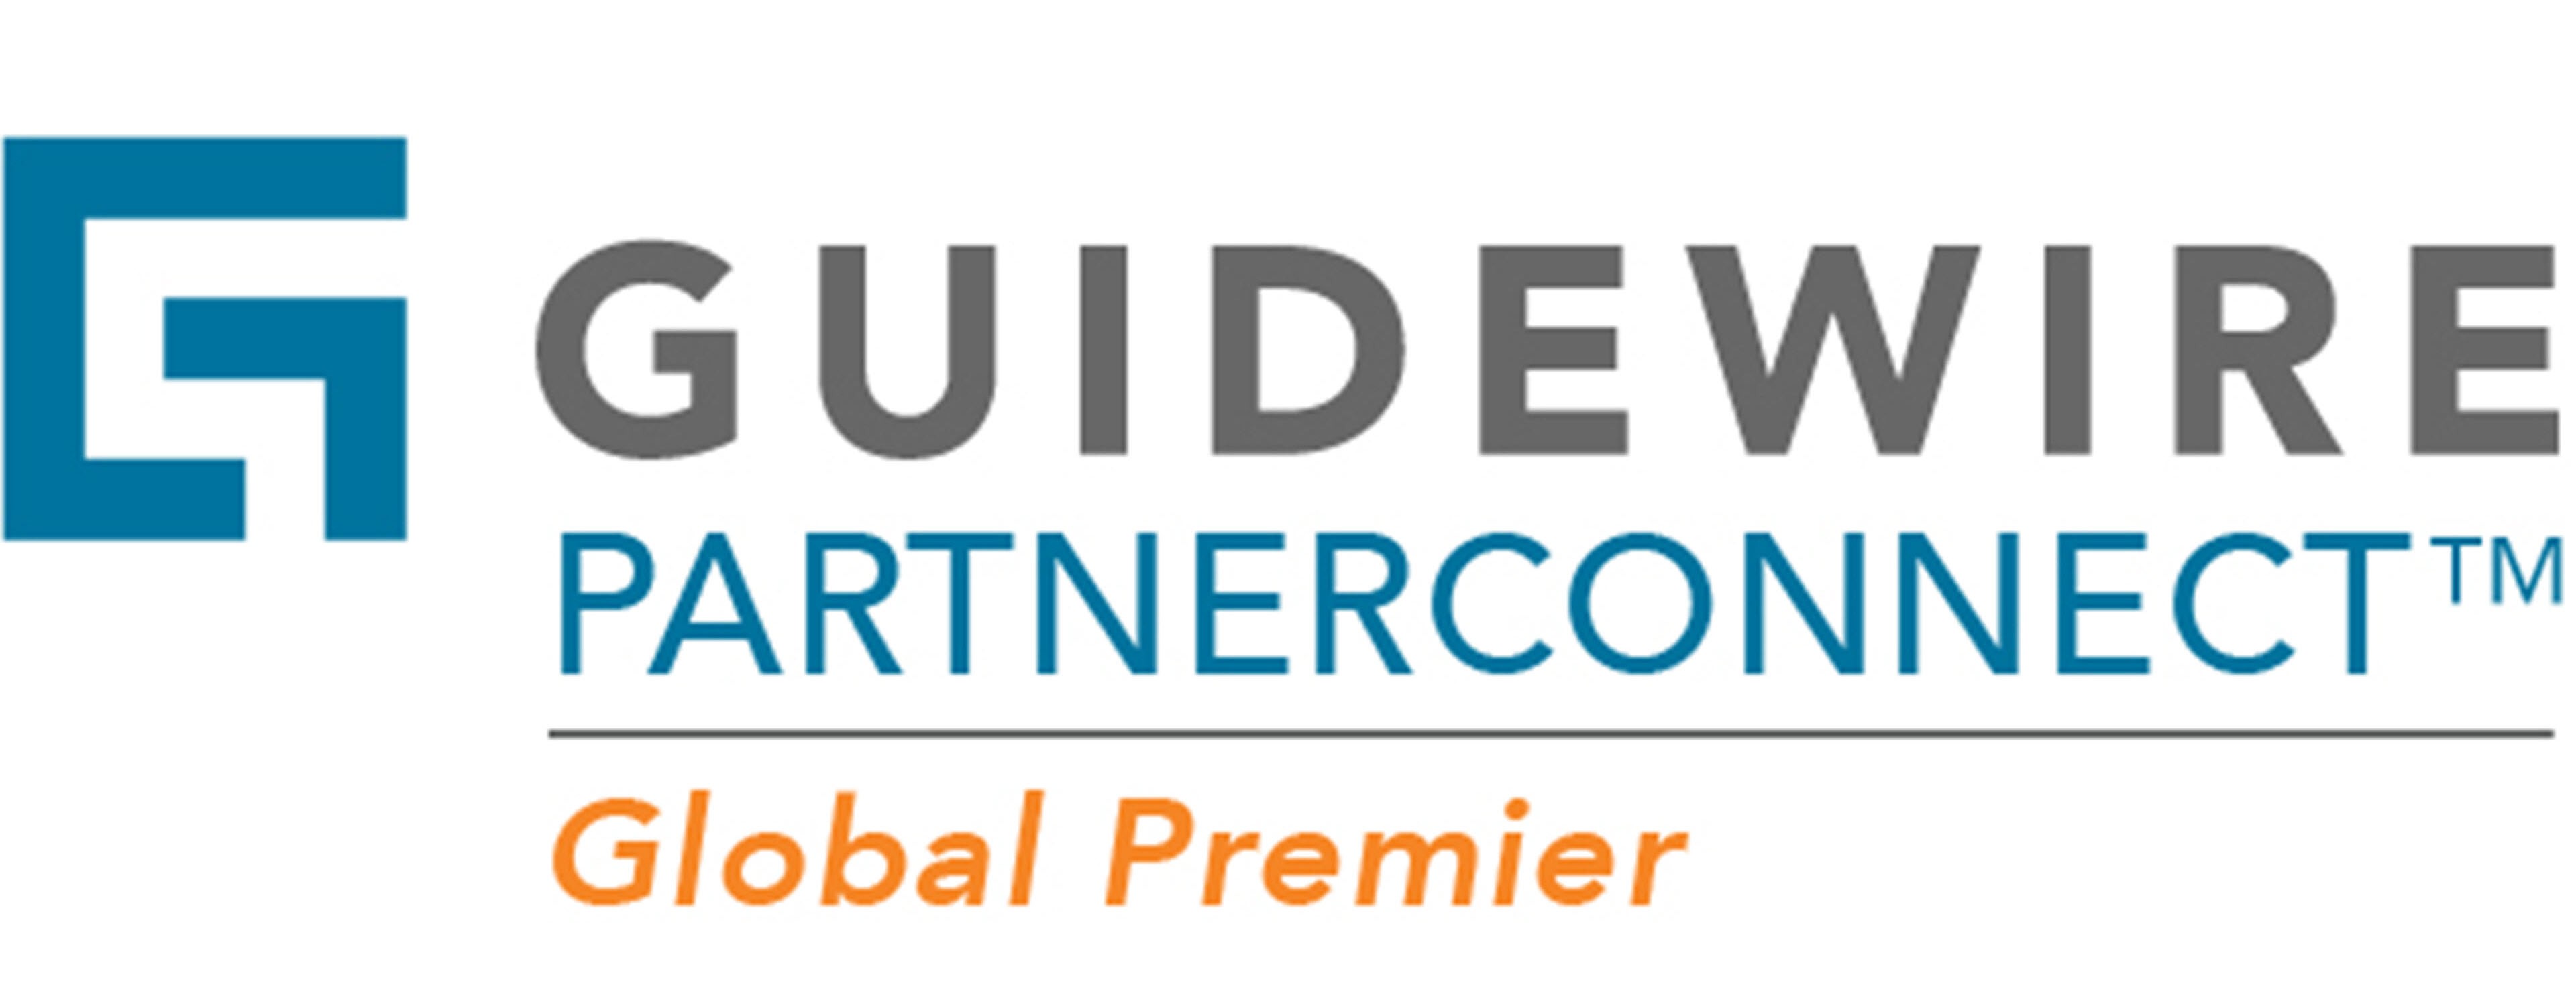             Guidewire-Logo        